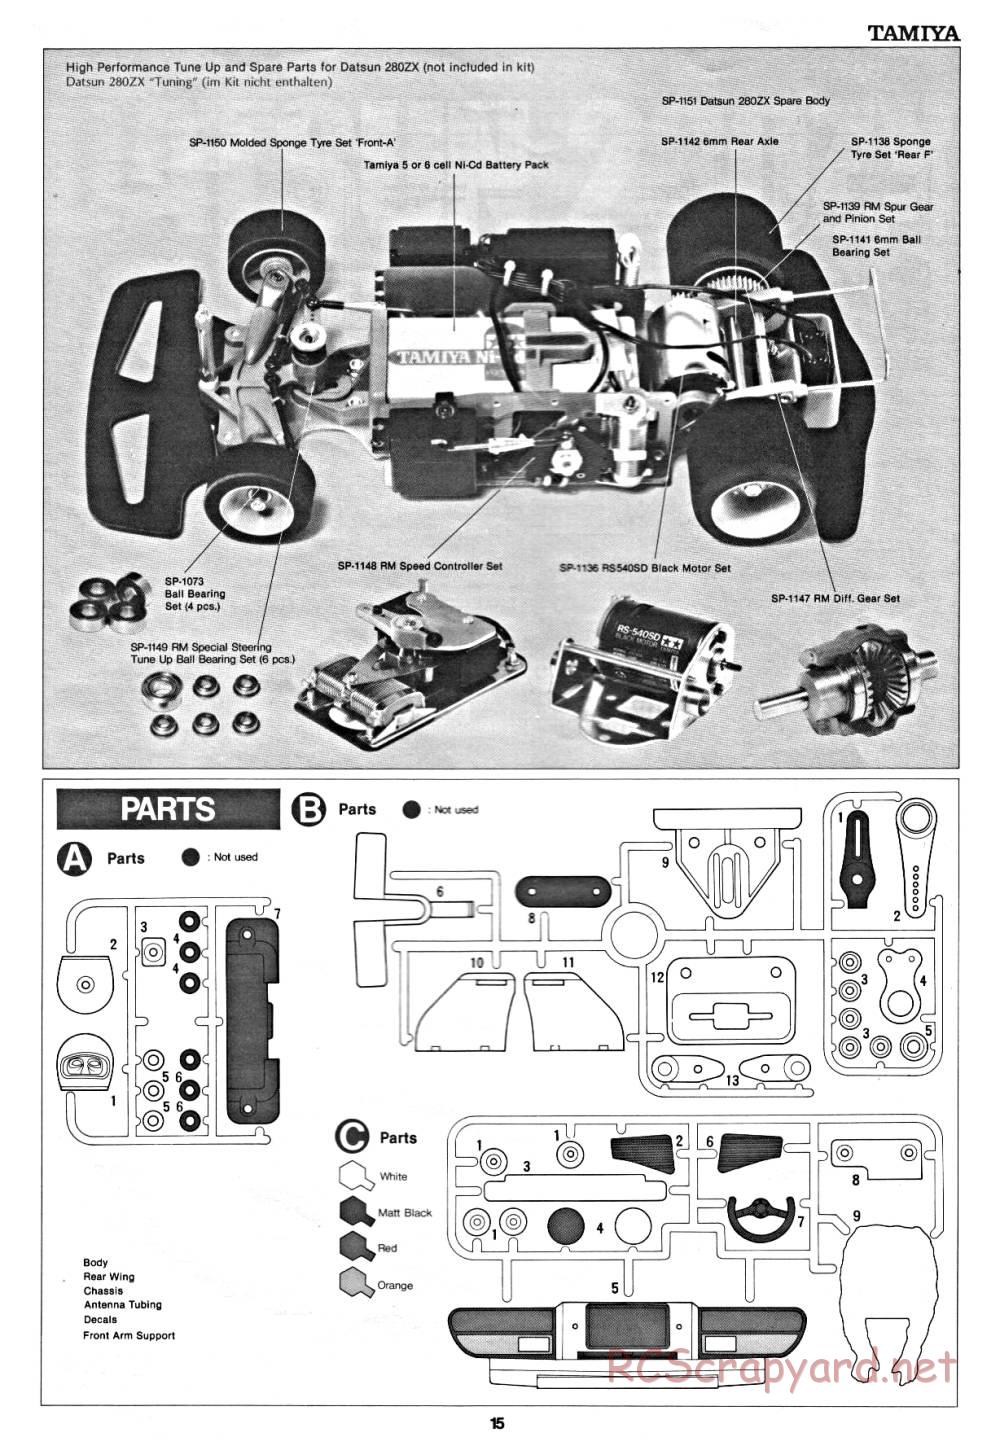 Tamiya - Datsun 280ZX - 58022 - Manual - Page 15